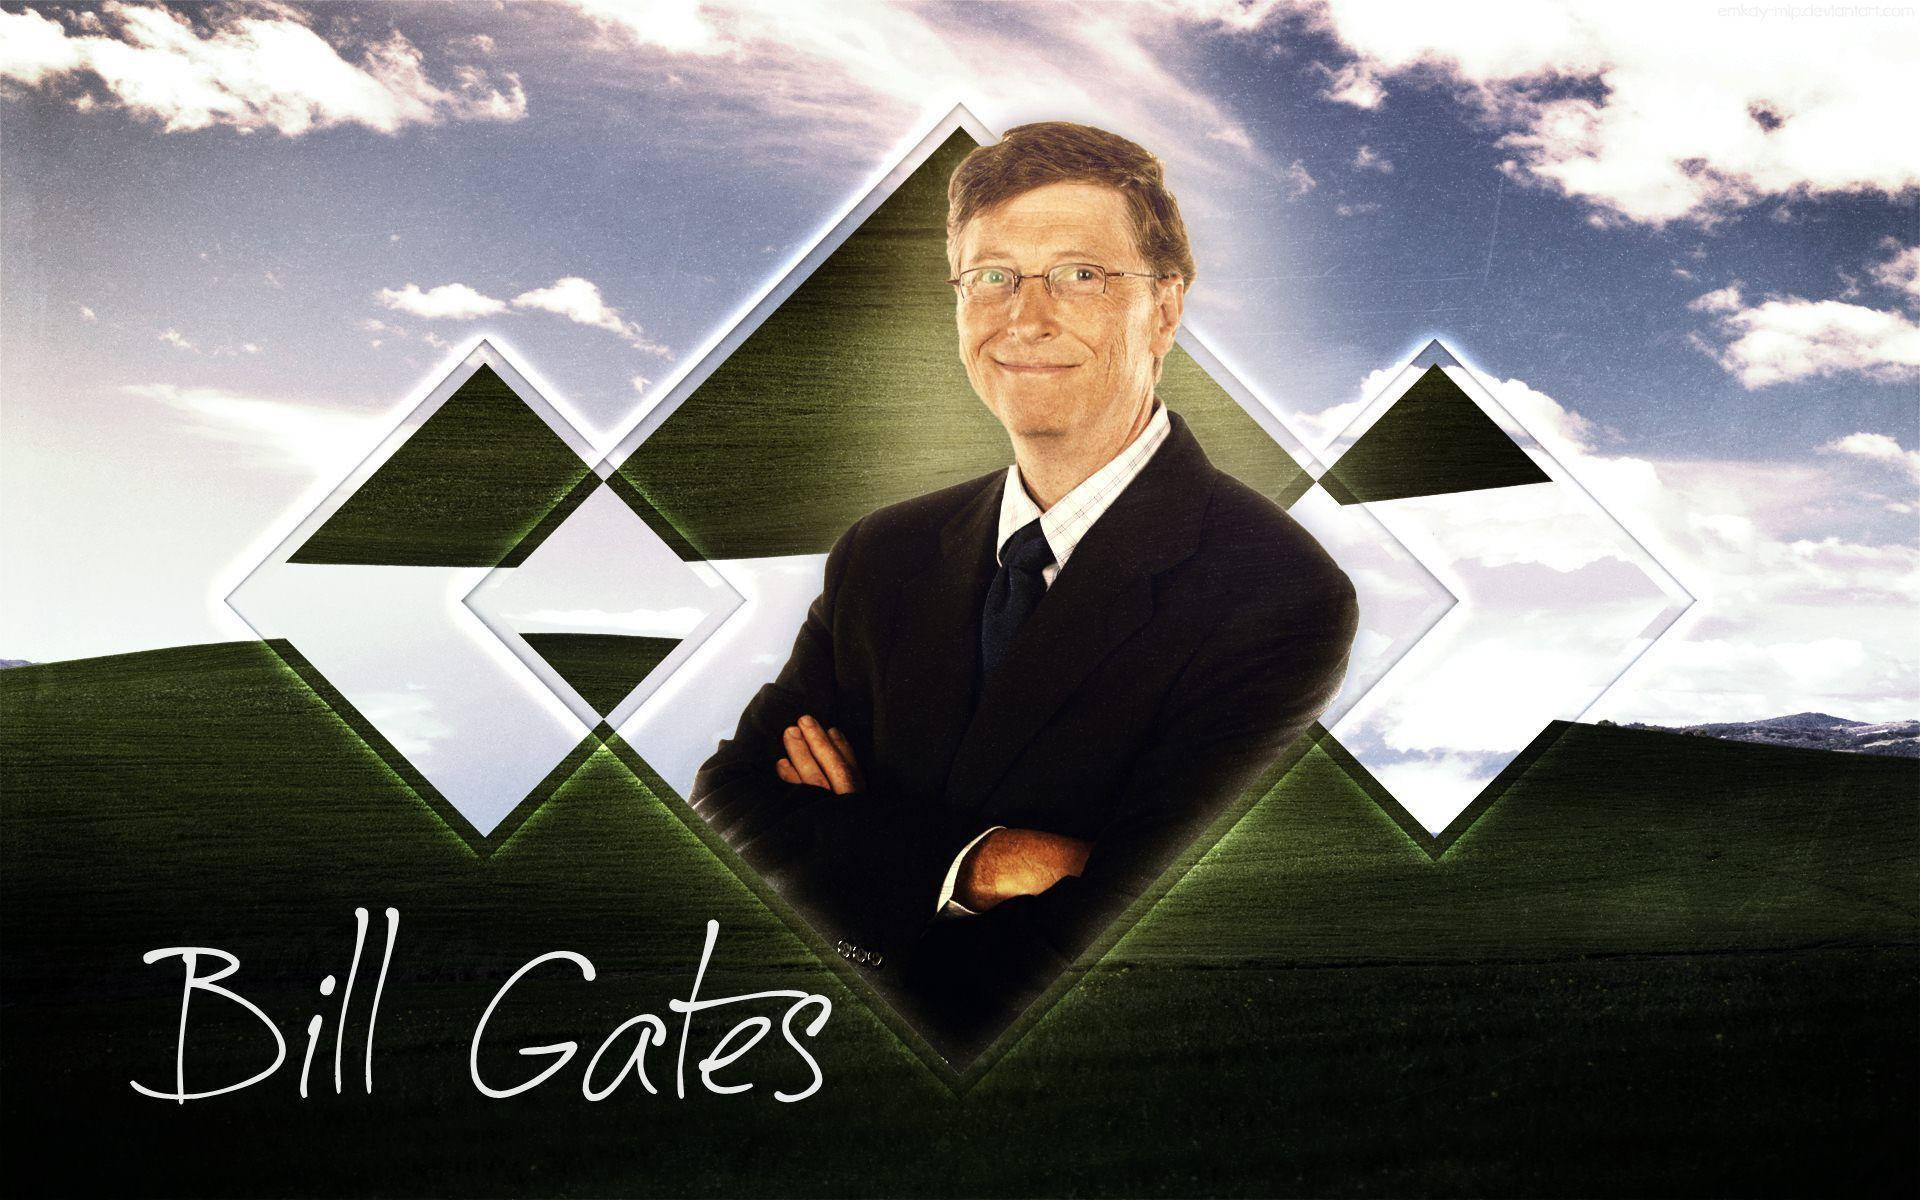 Bill Gates Green Poster Background